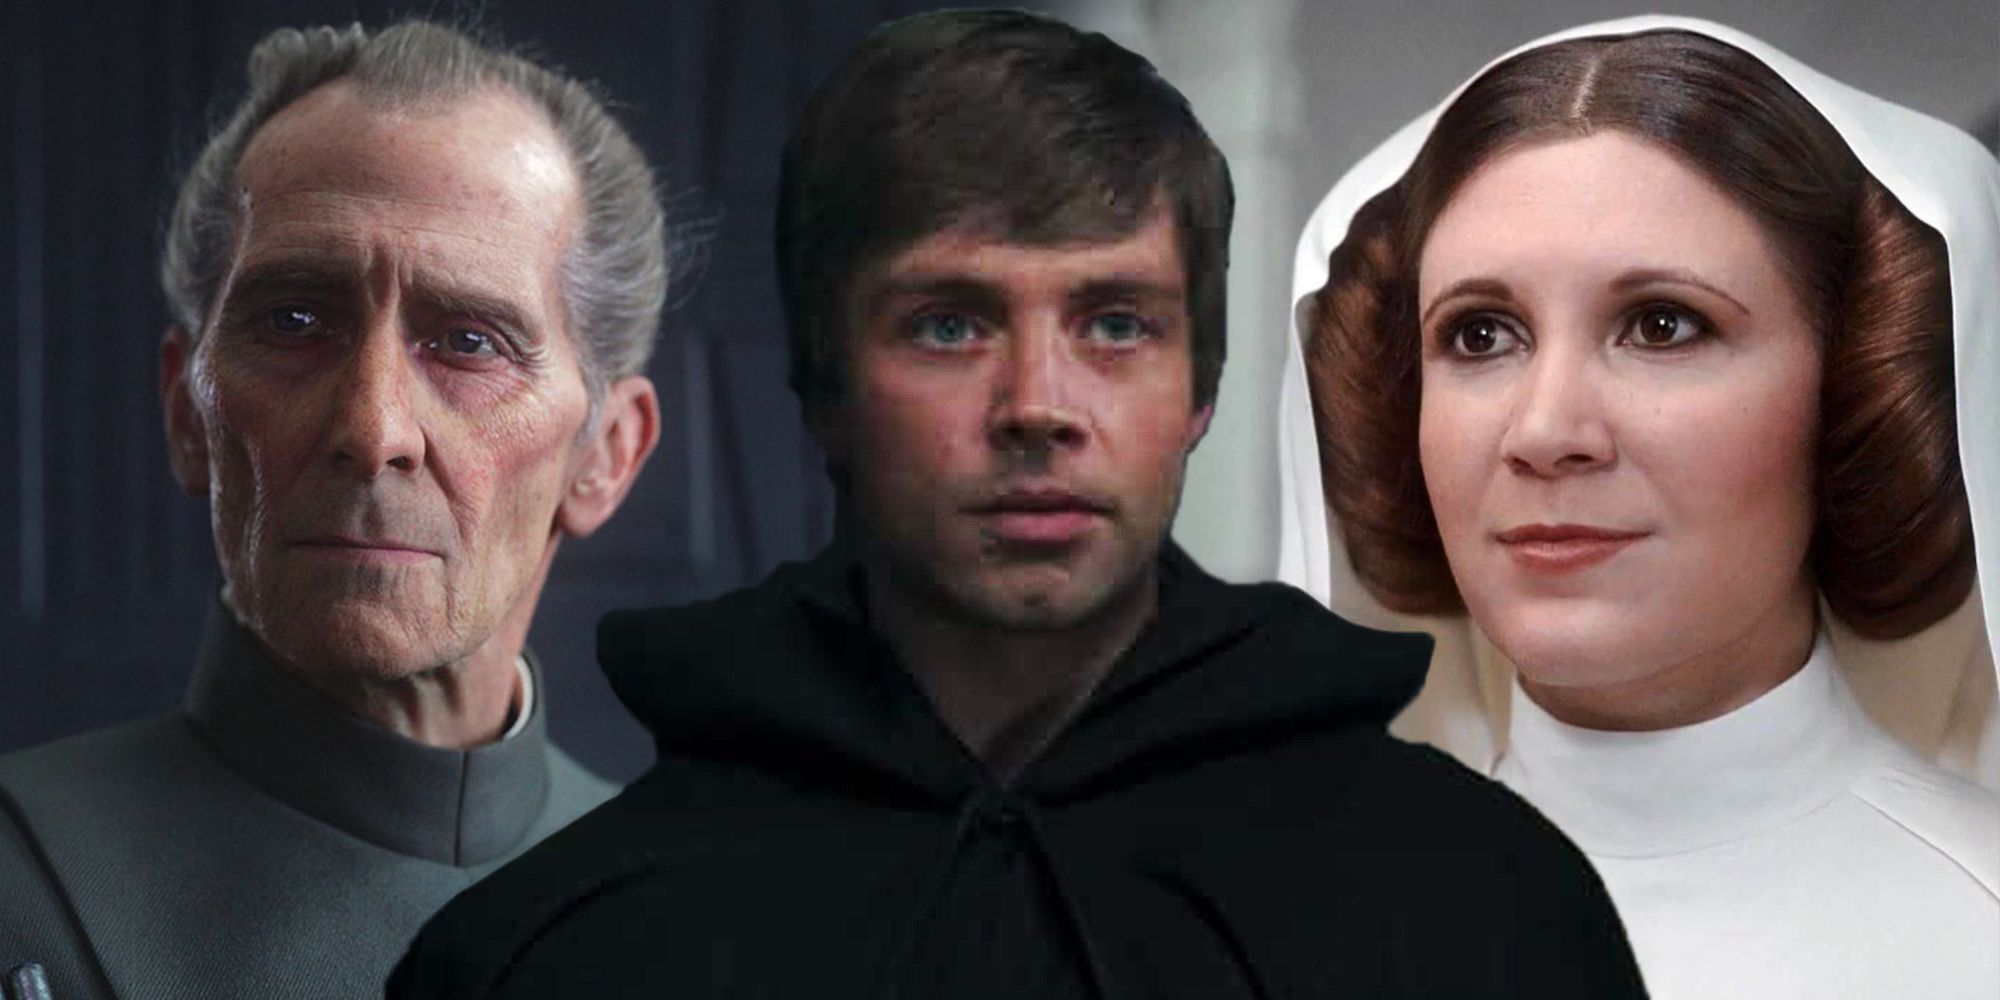 De-Aged Luke, Leia, and Grand Moff Tarkin CGI in Star Wars